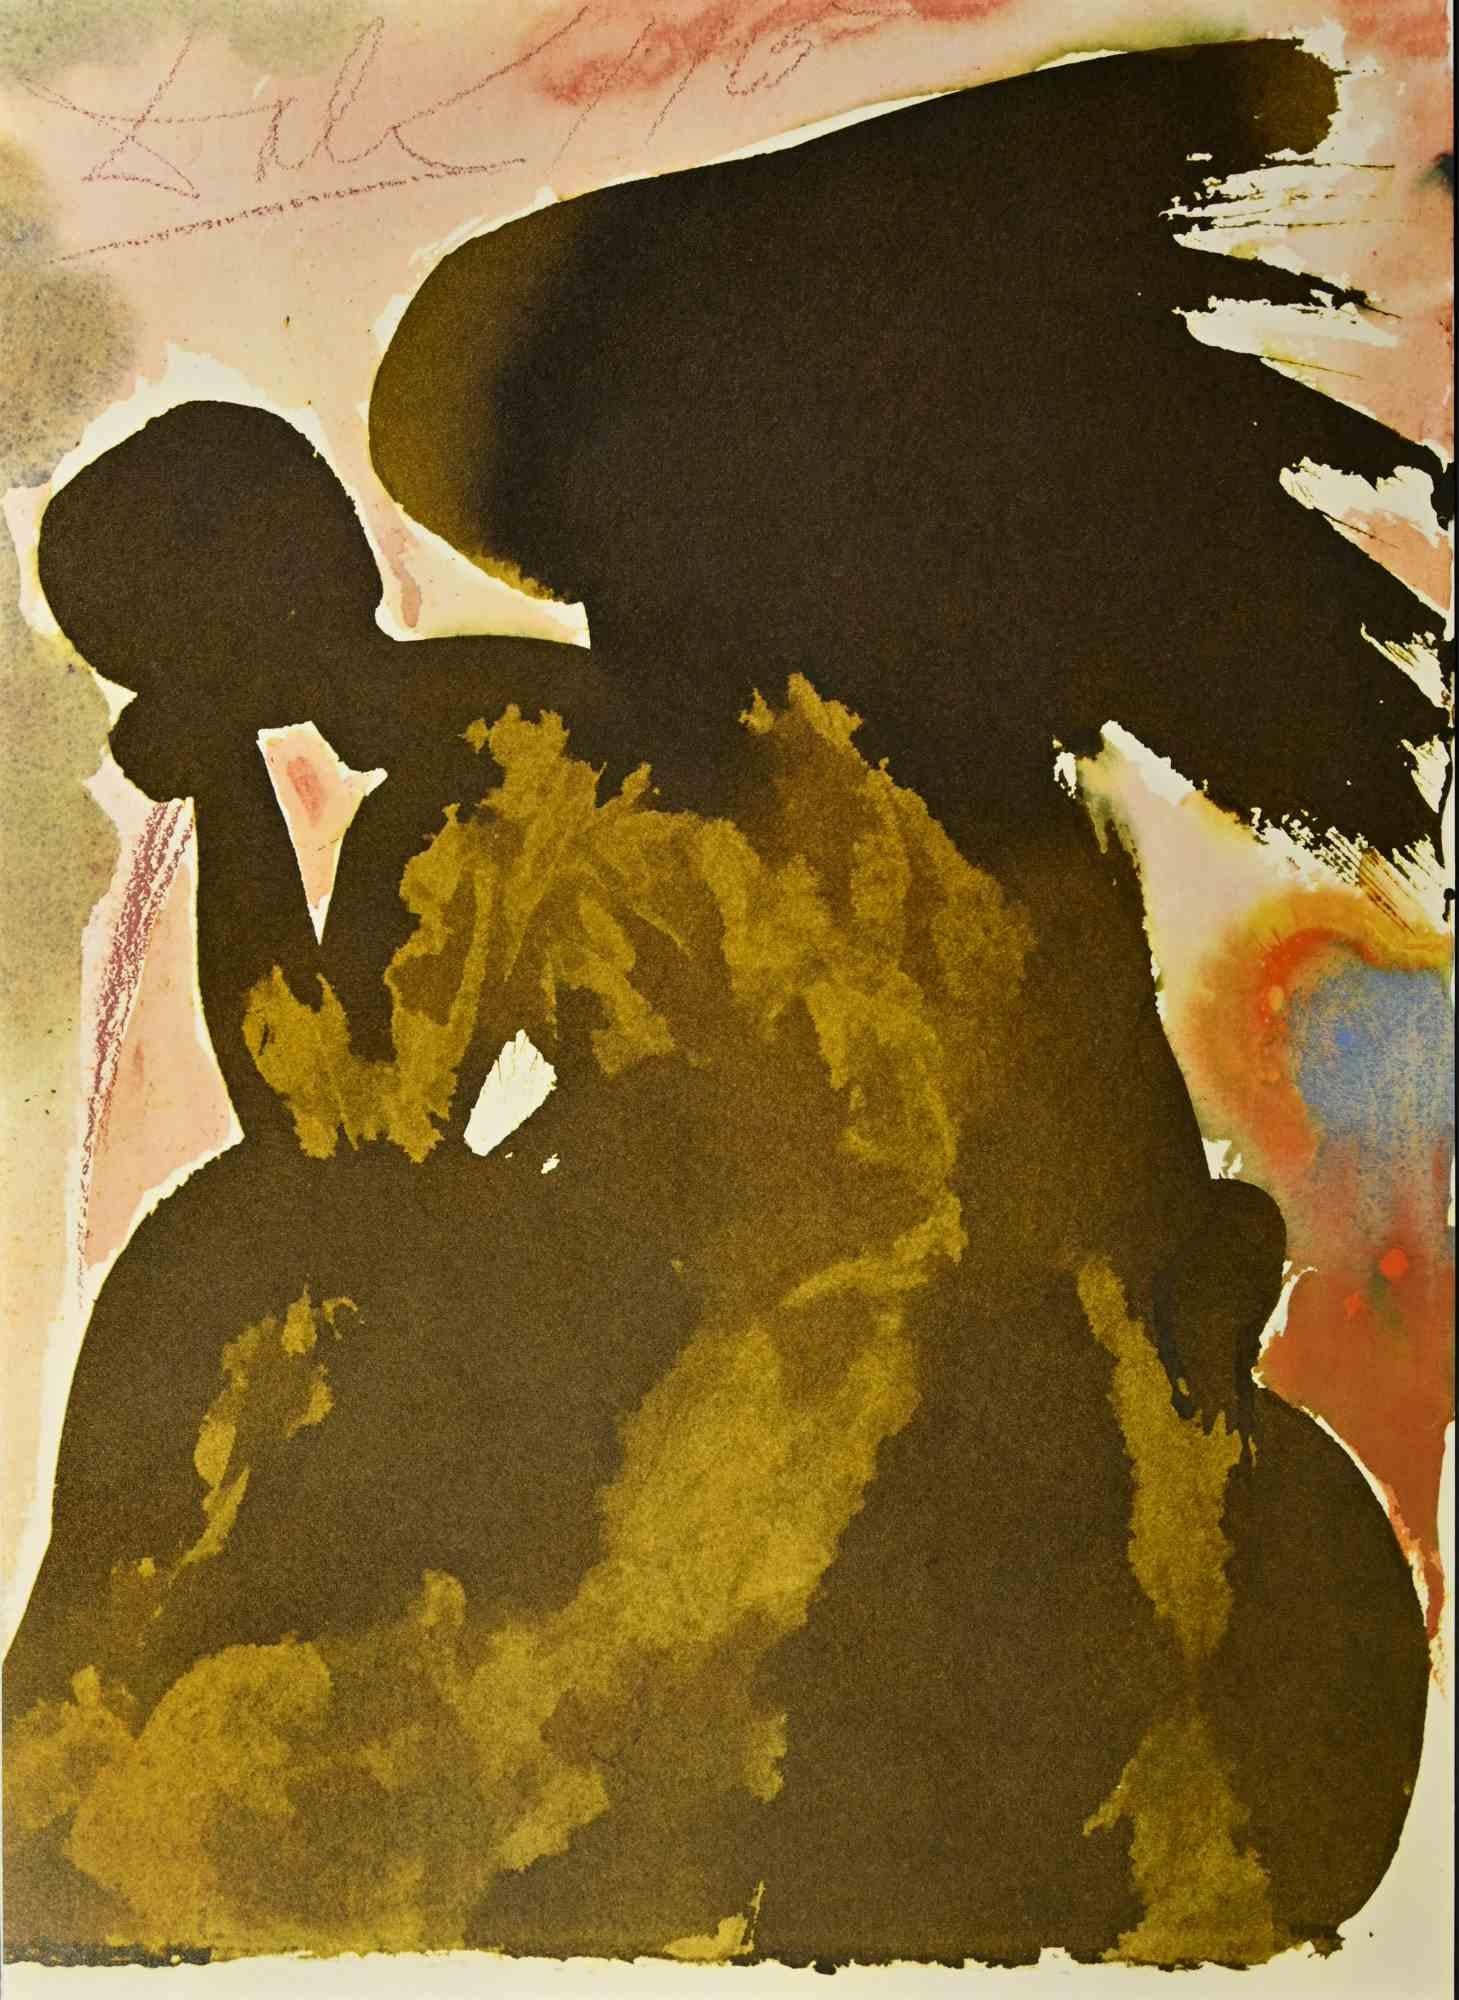 Salvador Dalí Print - Inter Filios Dei Affuit Etiam Satan - Lithograph - 1964